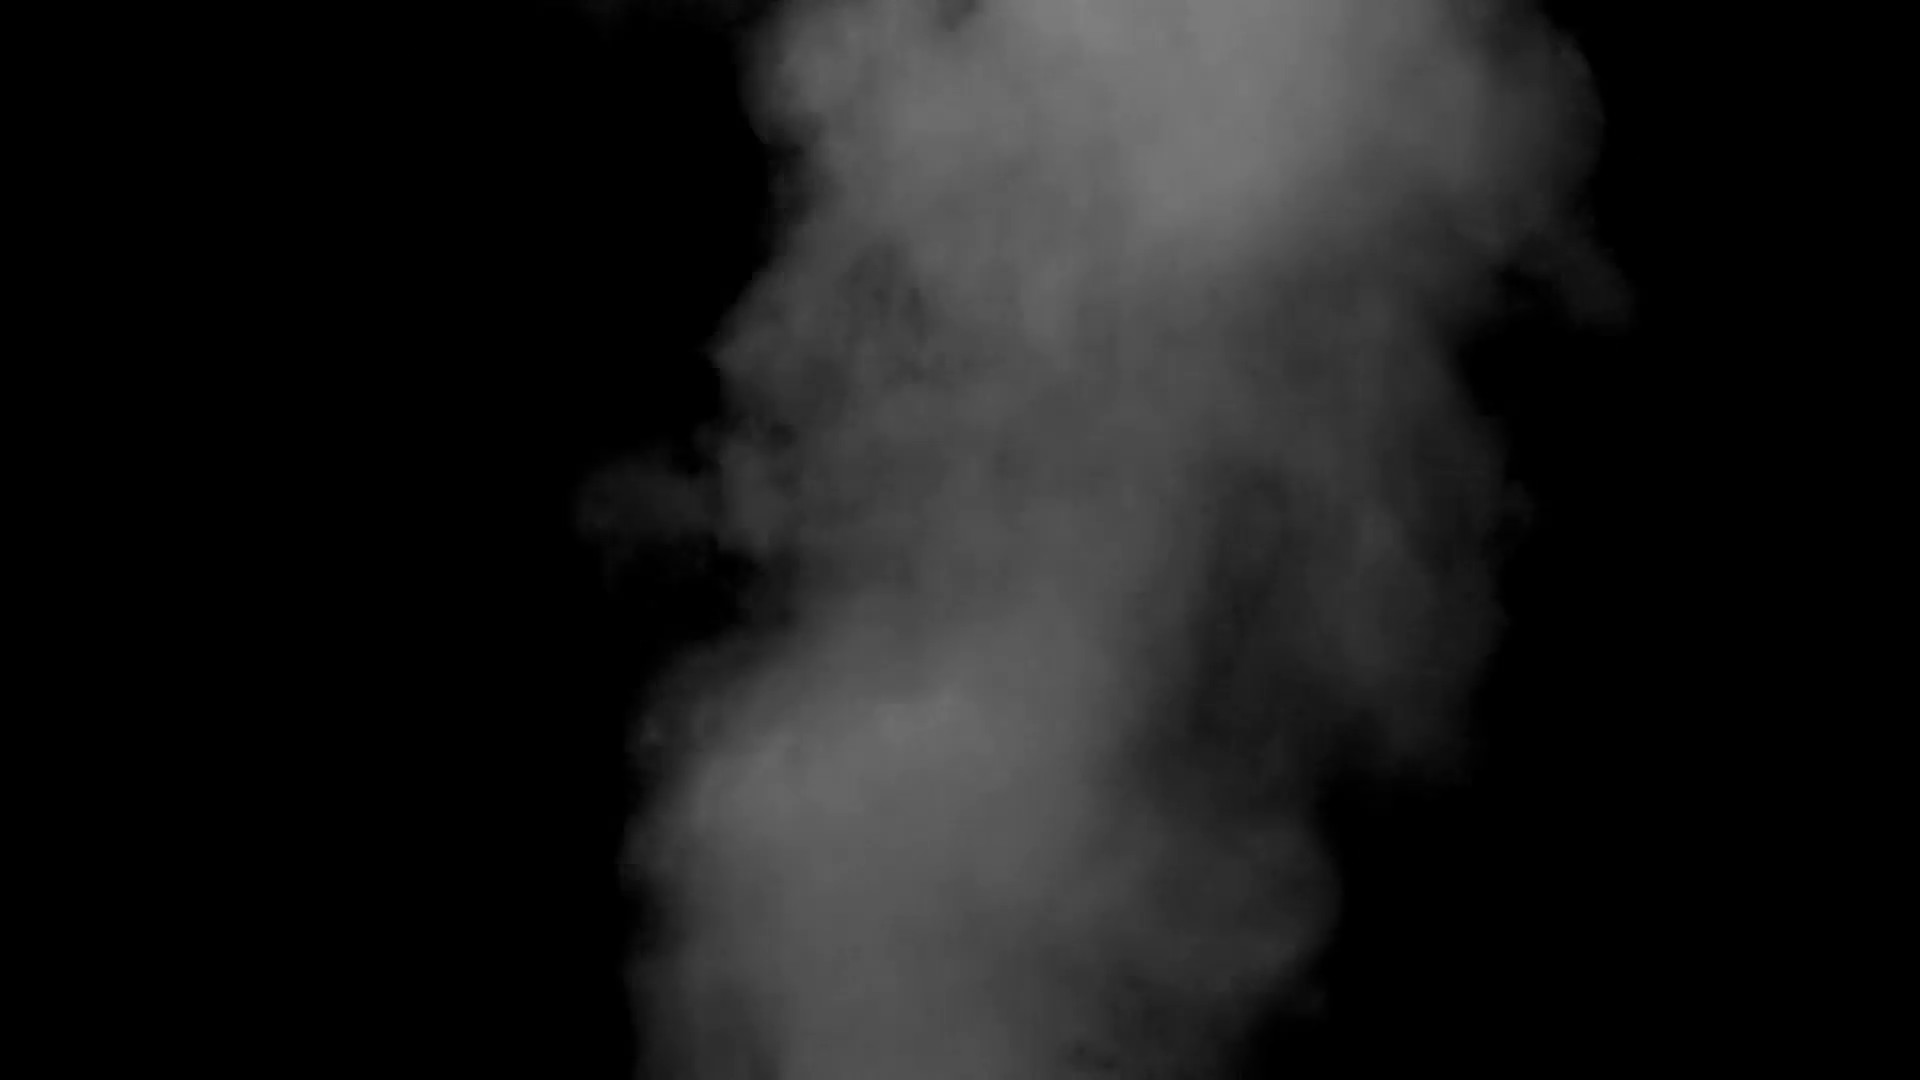 1920x1080 Grey smoke black background steam. Abstract smoke background, desaturated  grey steam shapes rising like